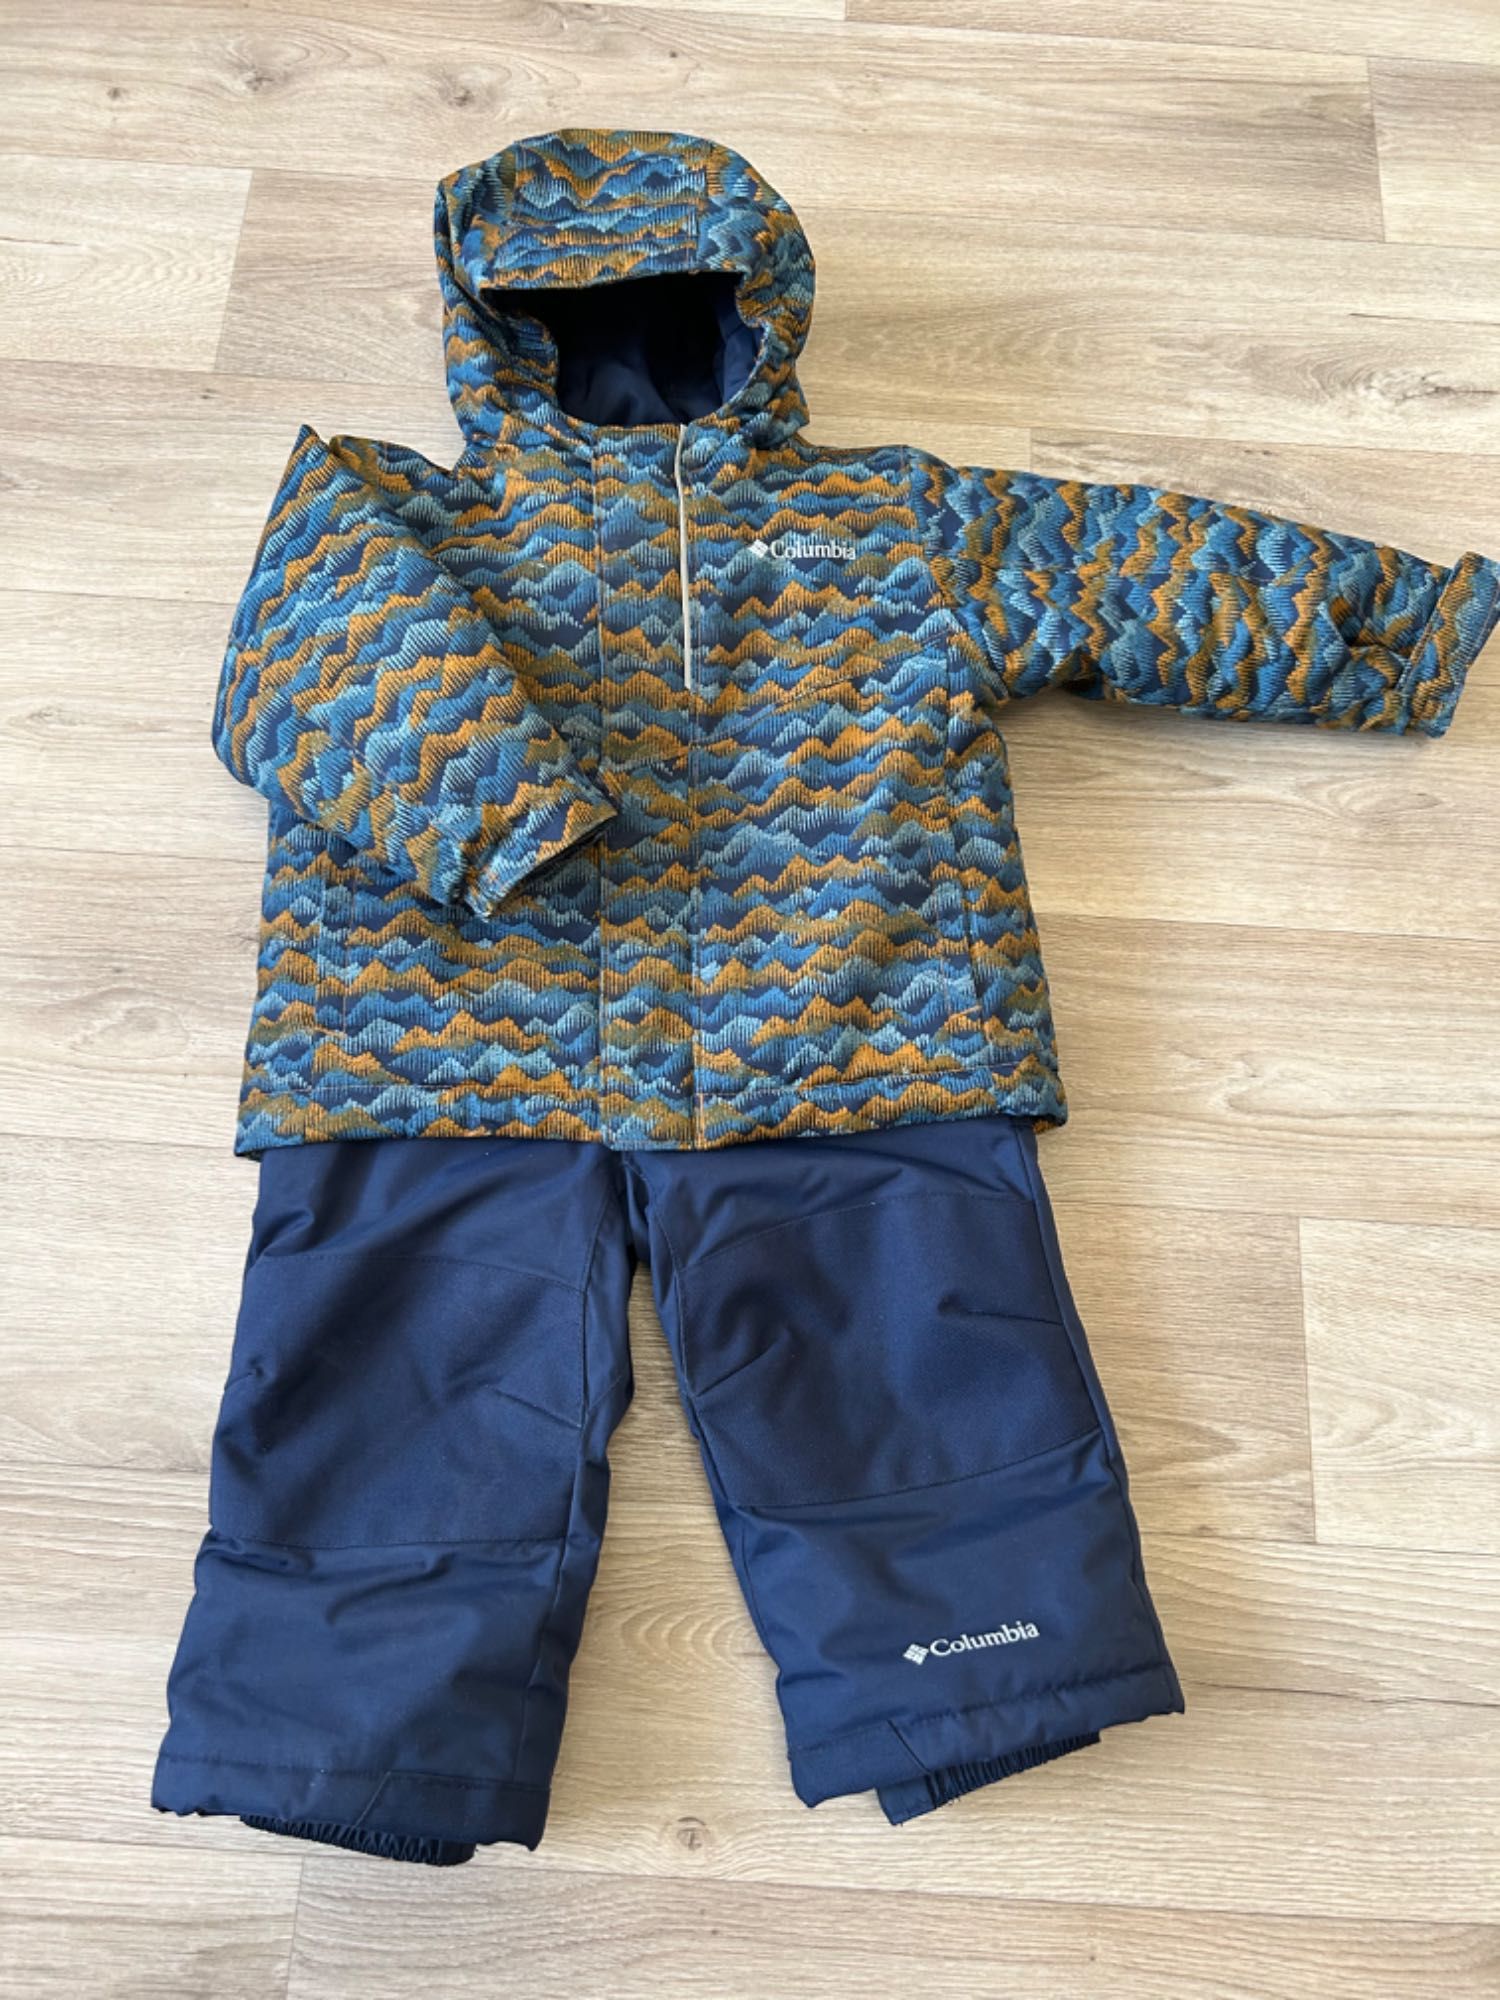 Зимний комплект Columbia куртка+комбинезон 18-24мес